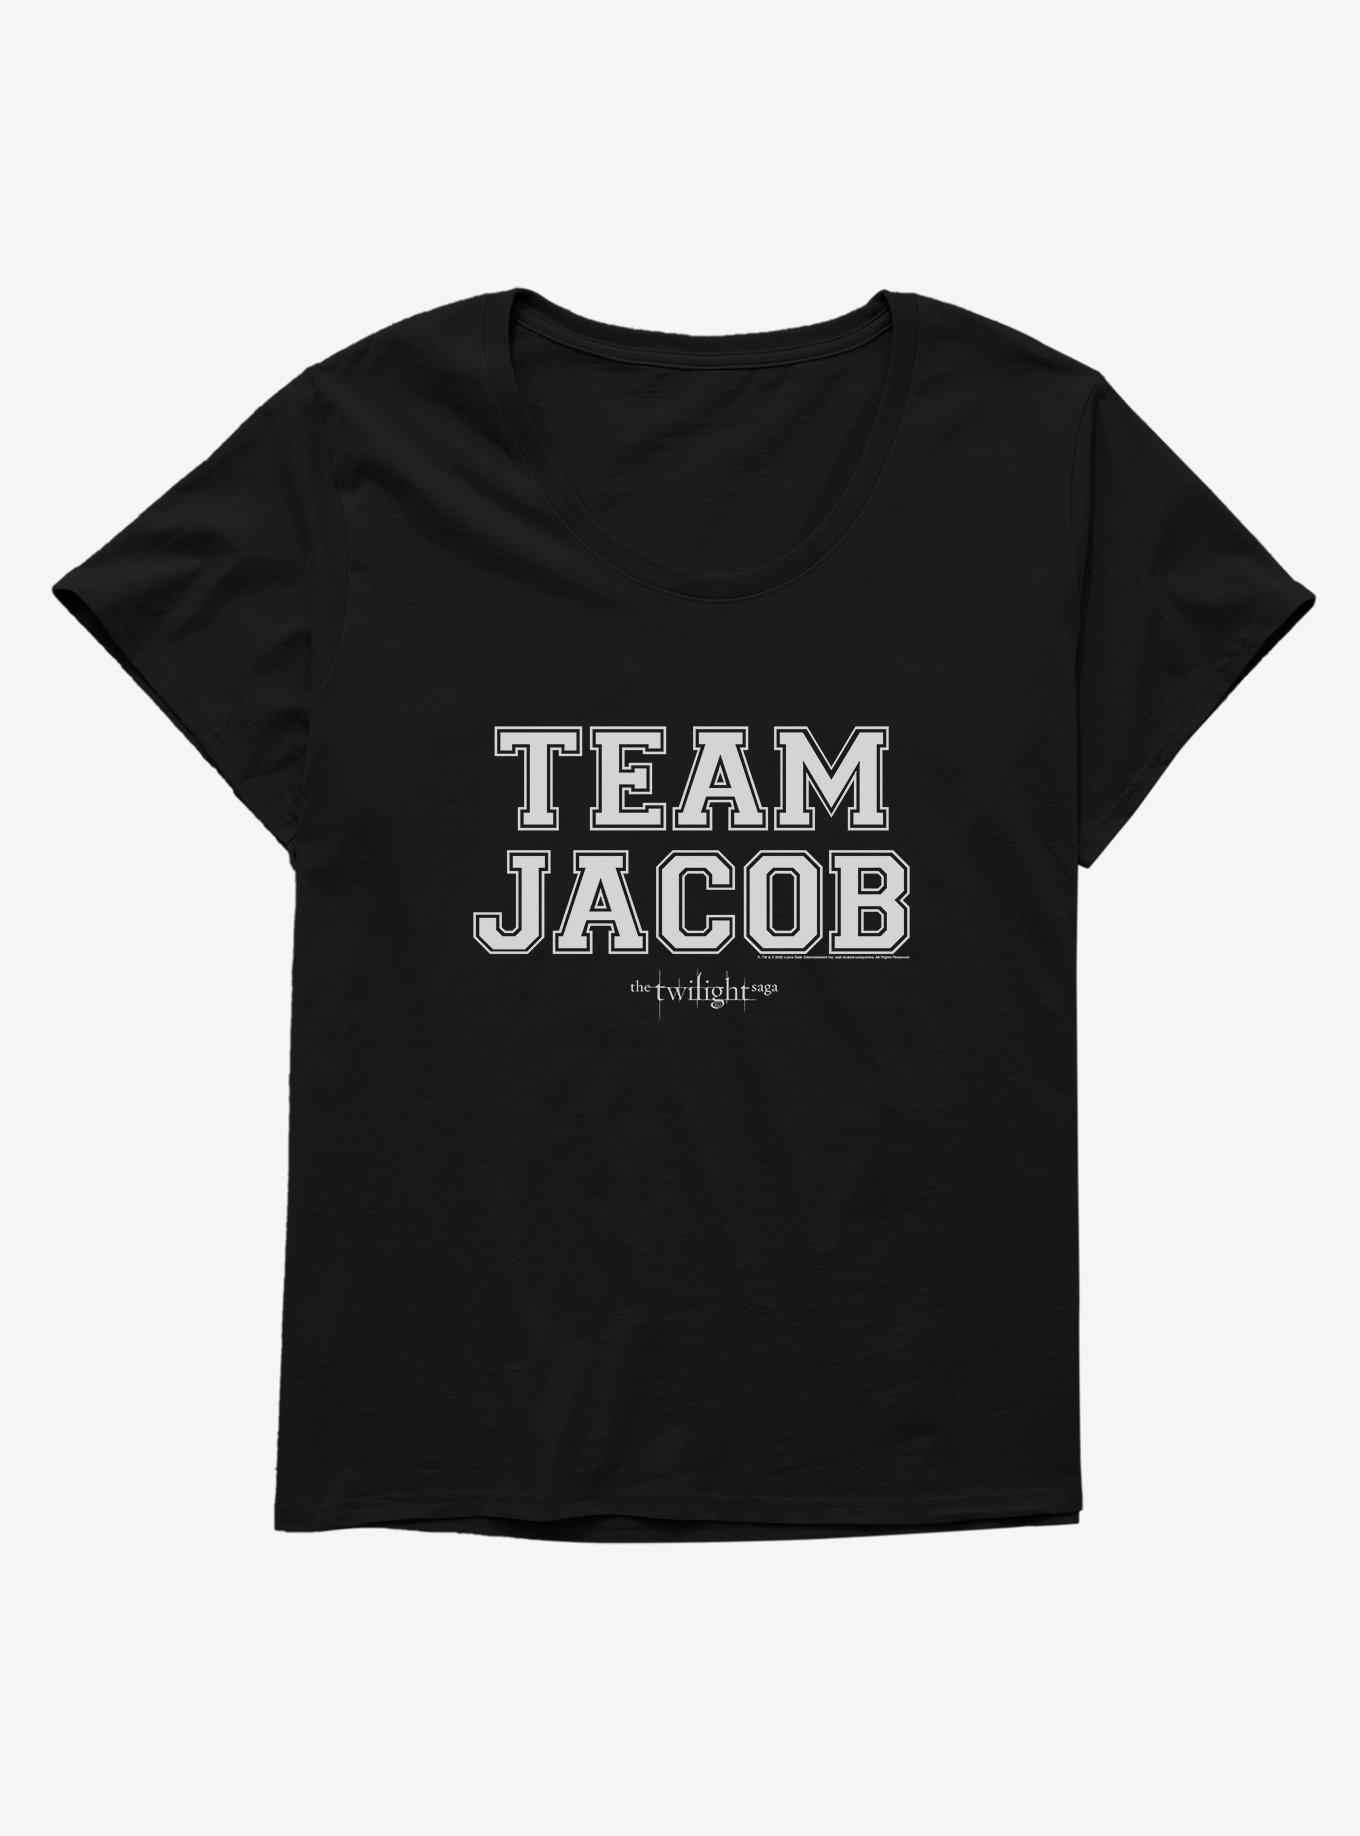 Twilight Team Jacob Collegiate Font Girls T-Shirt Plus